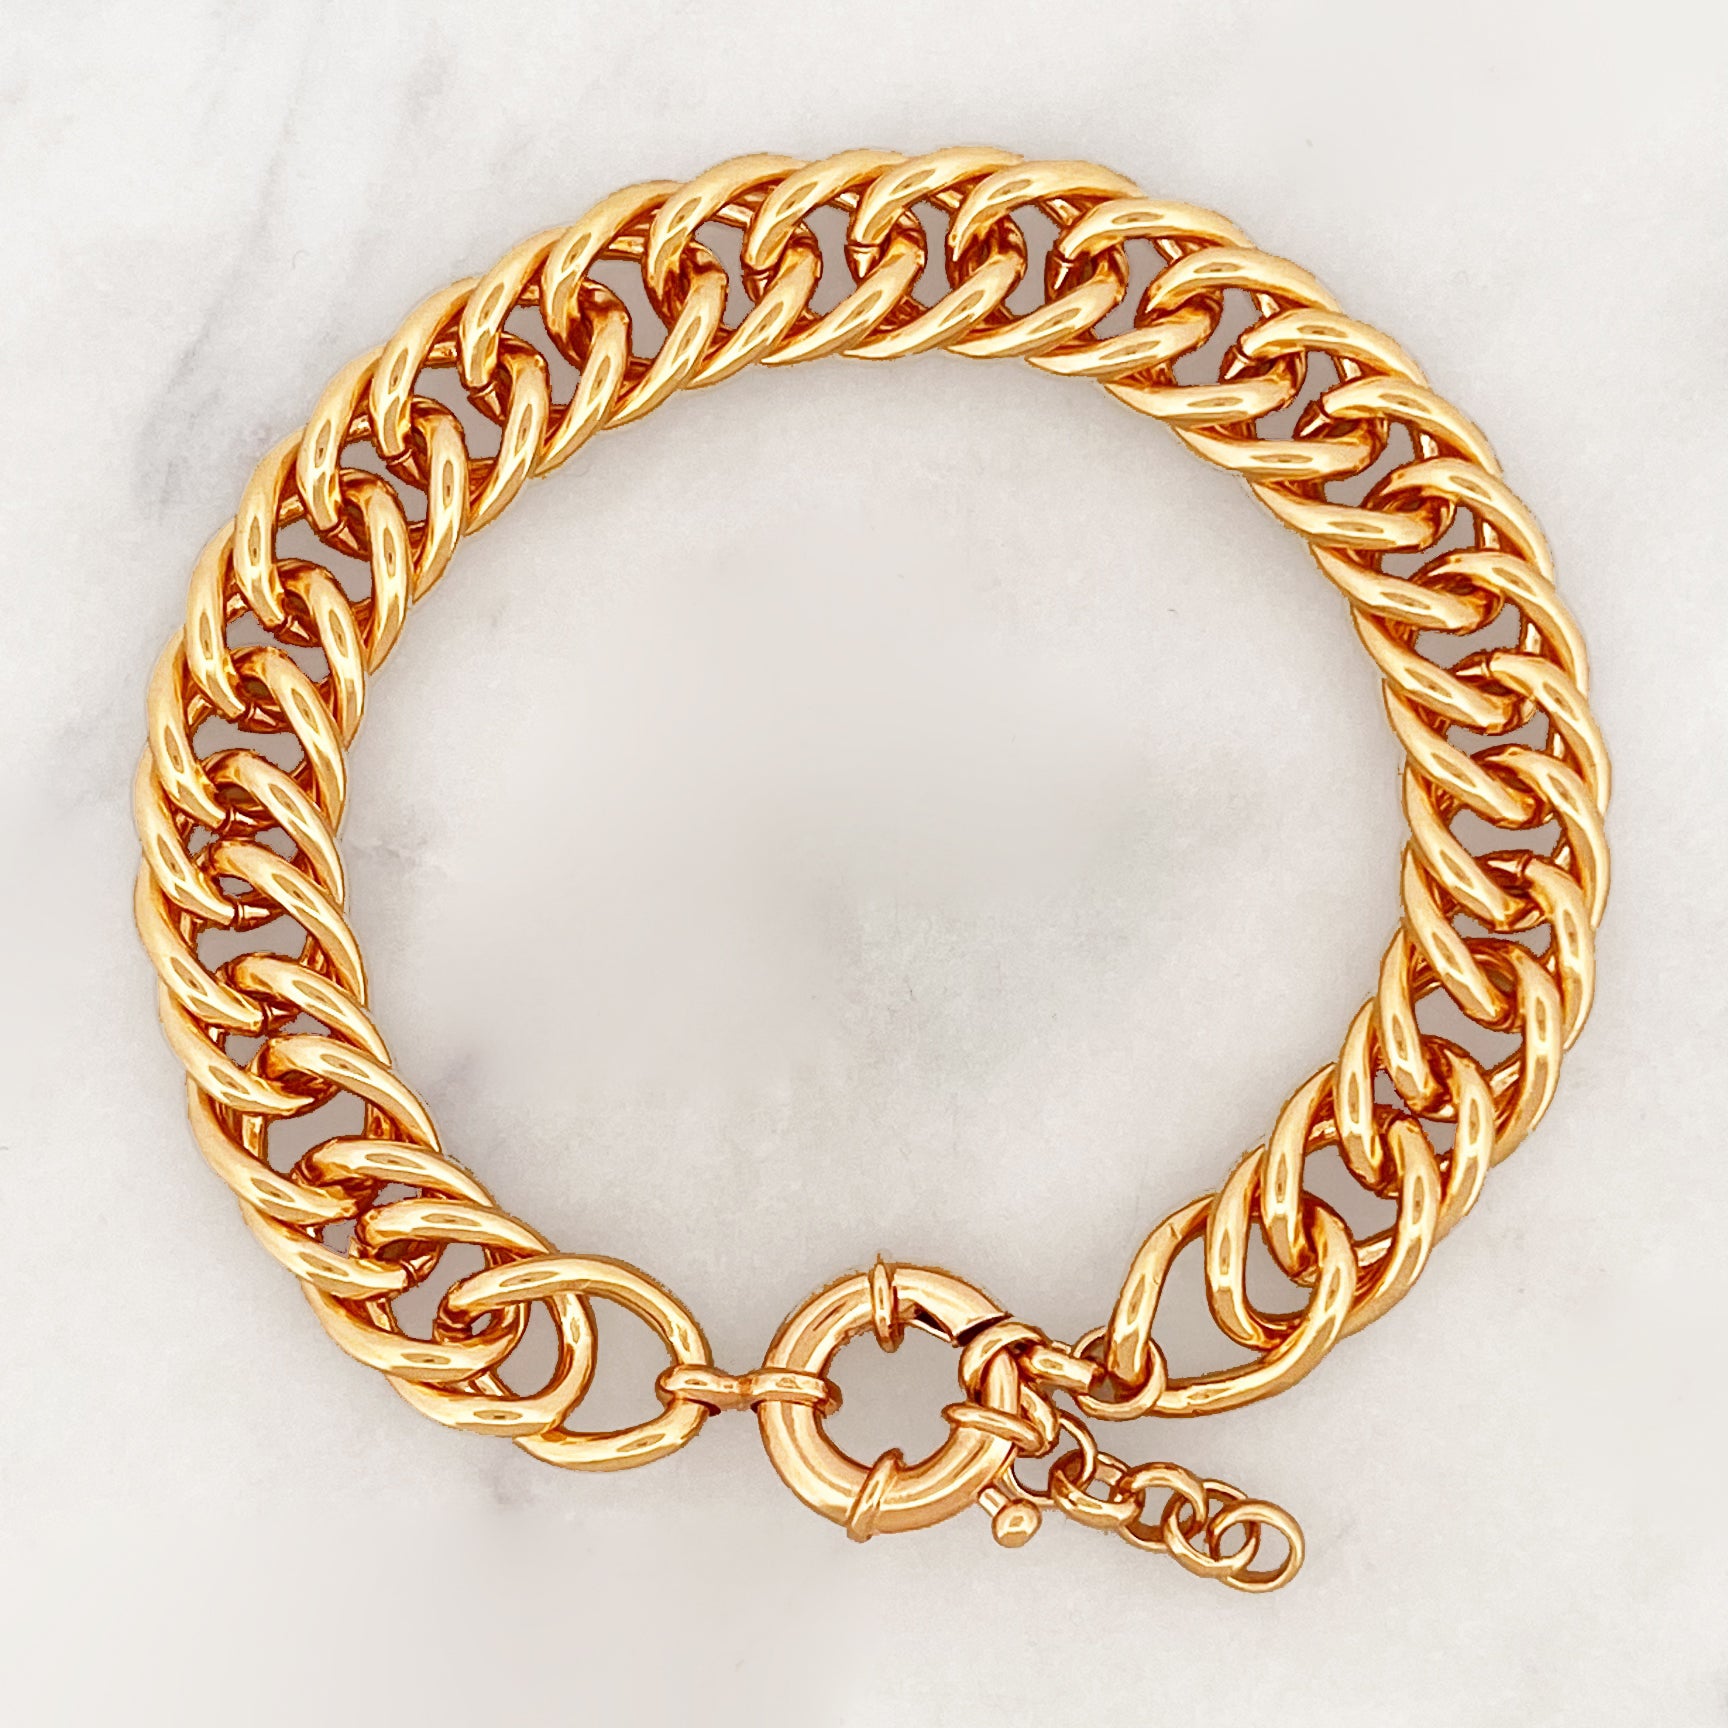 Heavy Big Gold Plated Cuban Curb Chain Link Men's Bracelet 24mm Wide  7.9-9.2